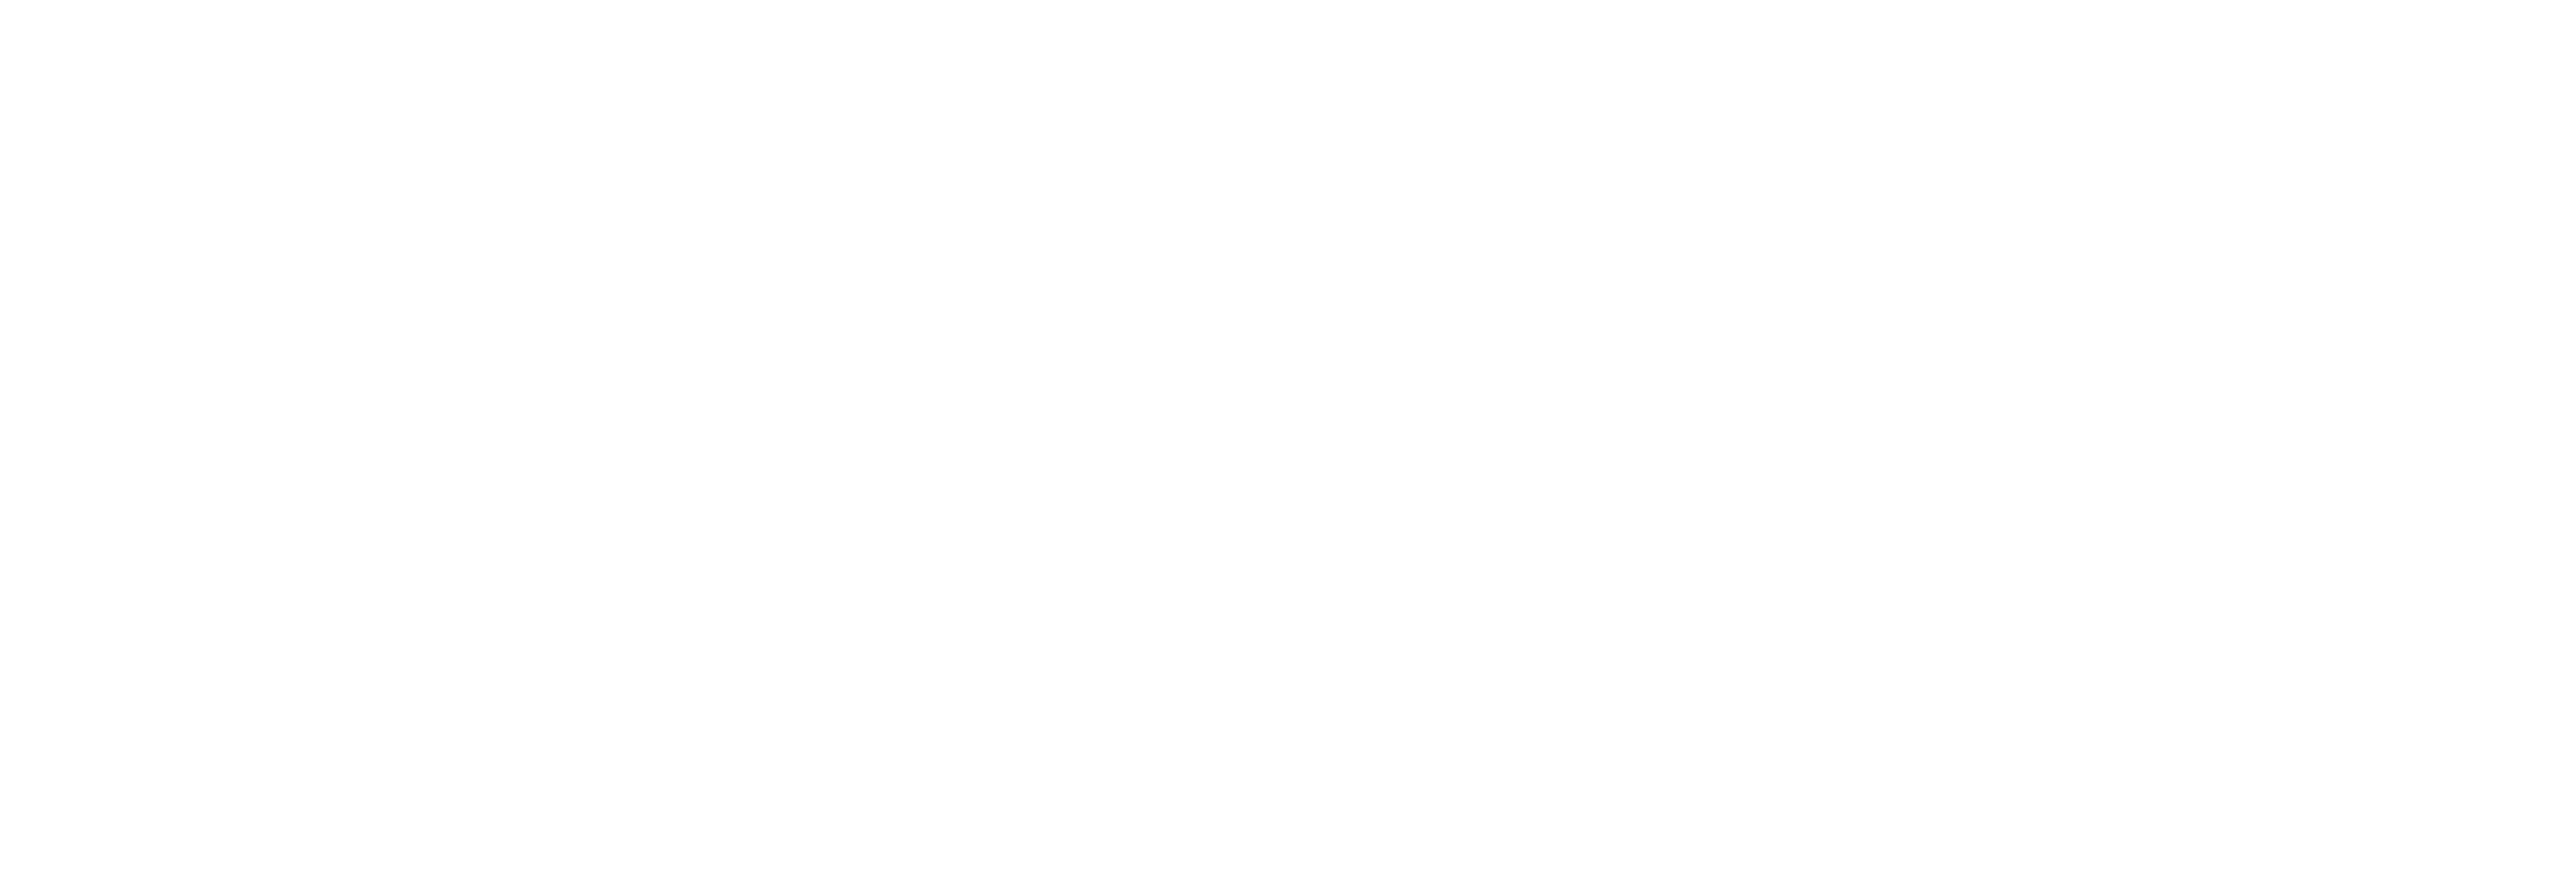 Grubers Burgers | Riccardo Giraudi | Restaurant | Logo